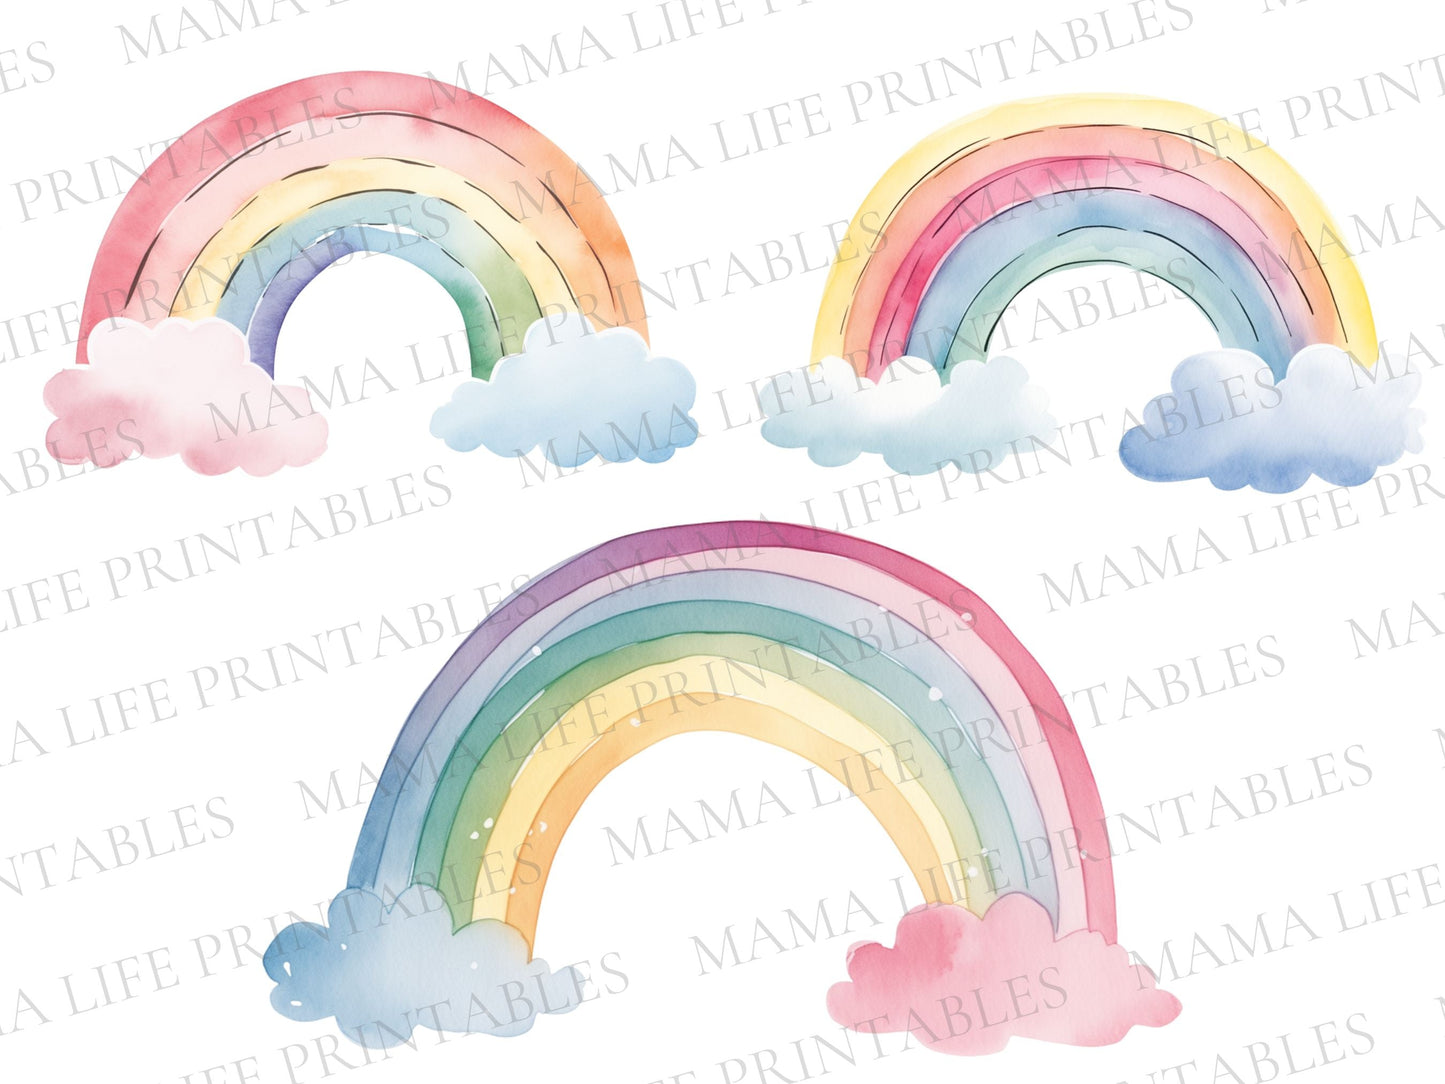 Unicorns & Rainbows PNG Cliparts - Digital Artwork - Mama Life Printables